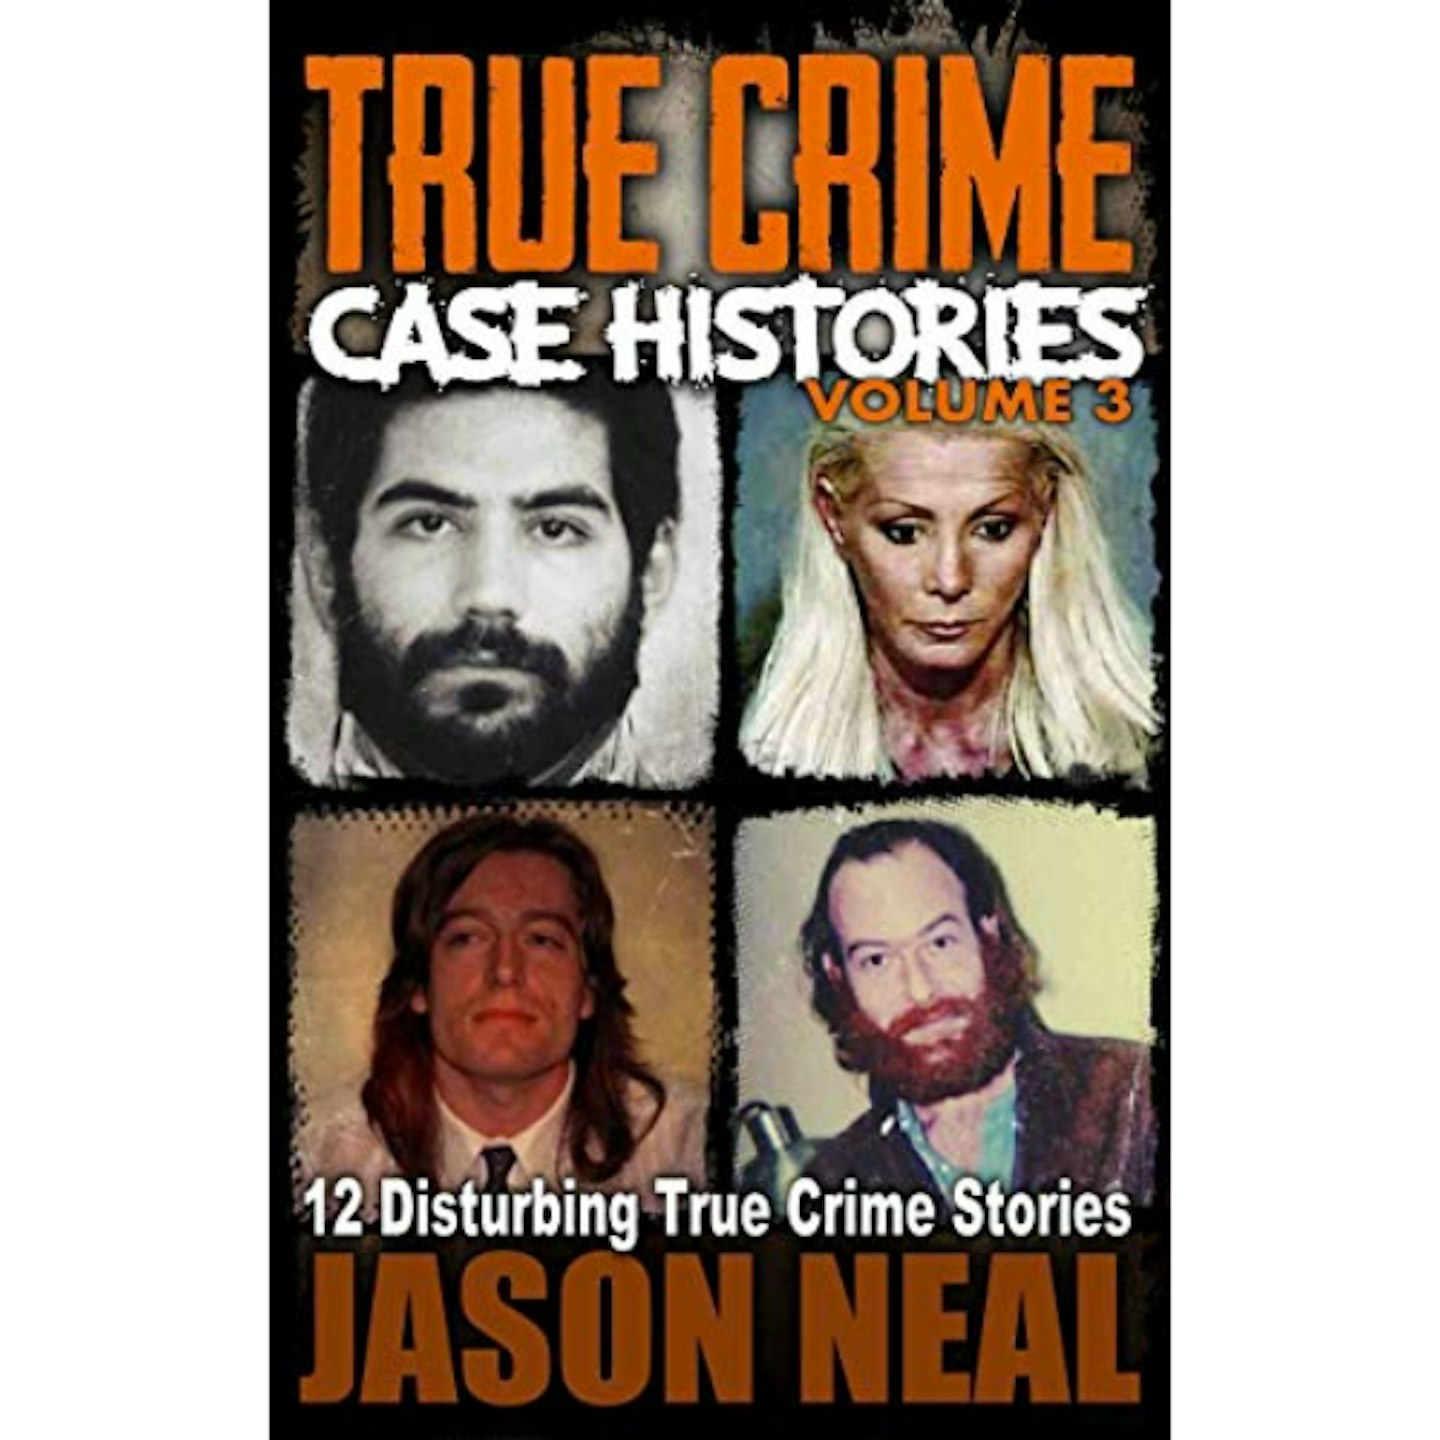 True Crime Case Histories - Volume 3 by Jason Neal